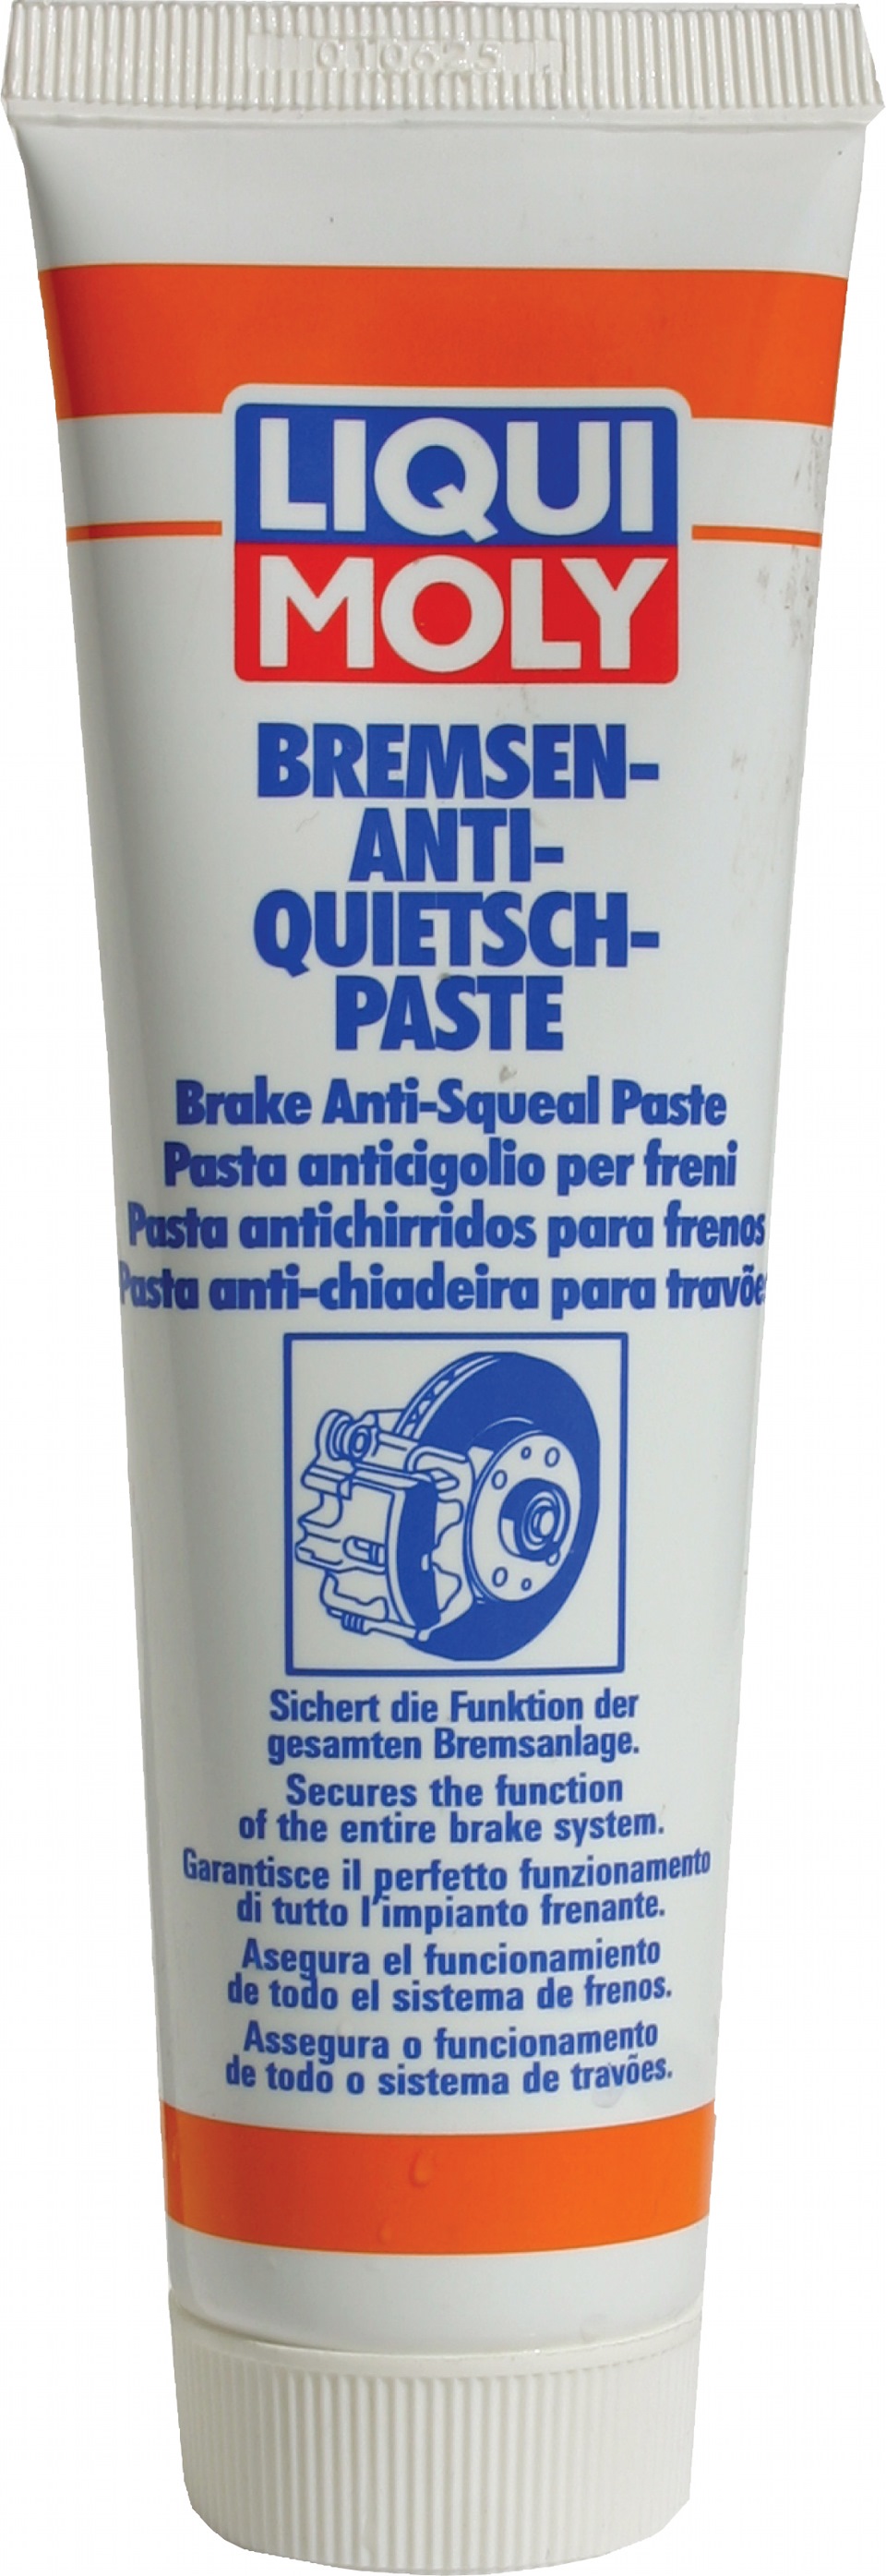  Паста для тормозной системы "Bremsen-anti-quietsch-paste", 100гр